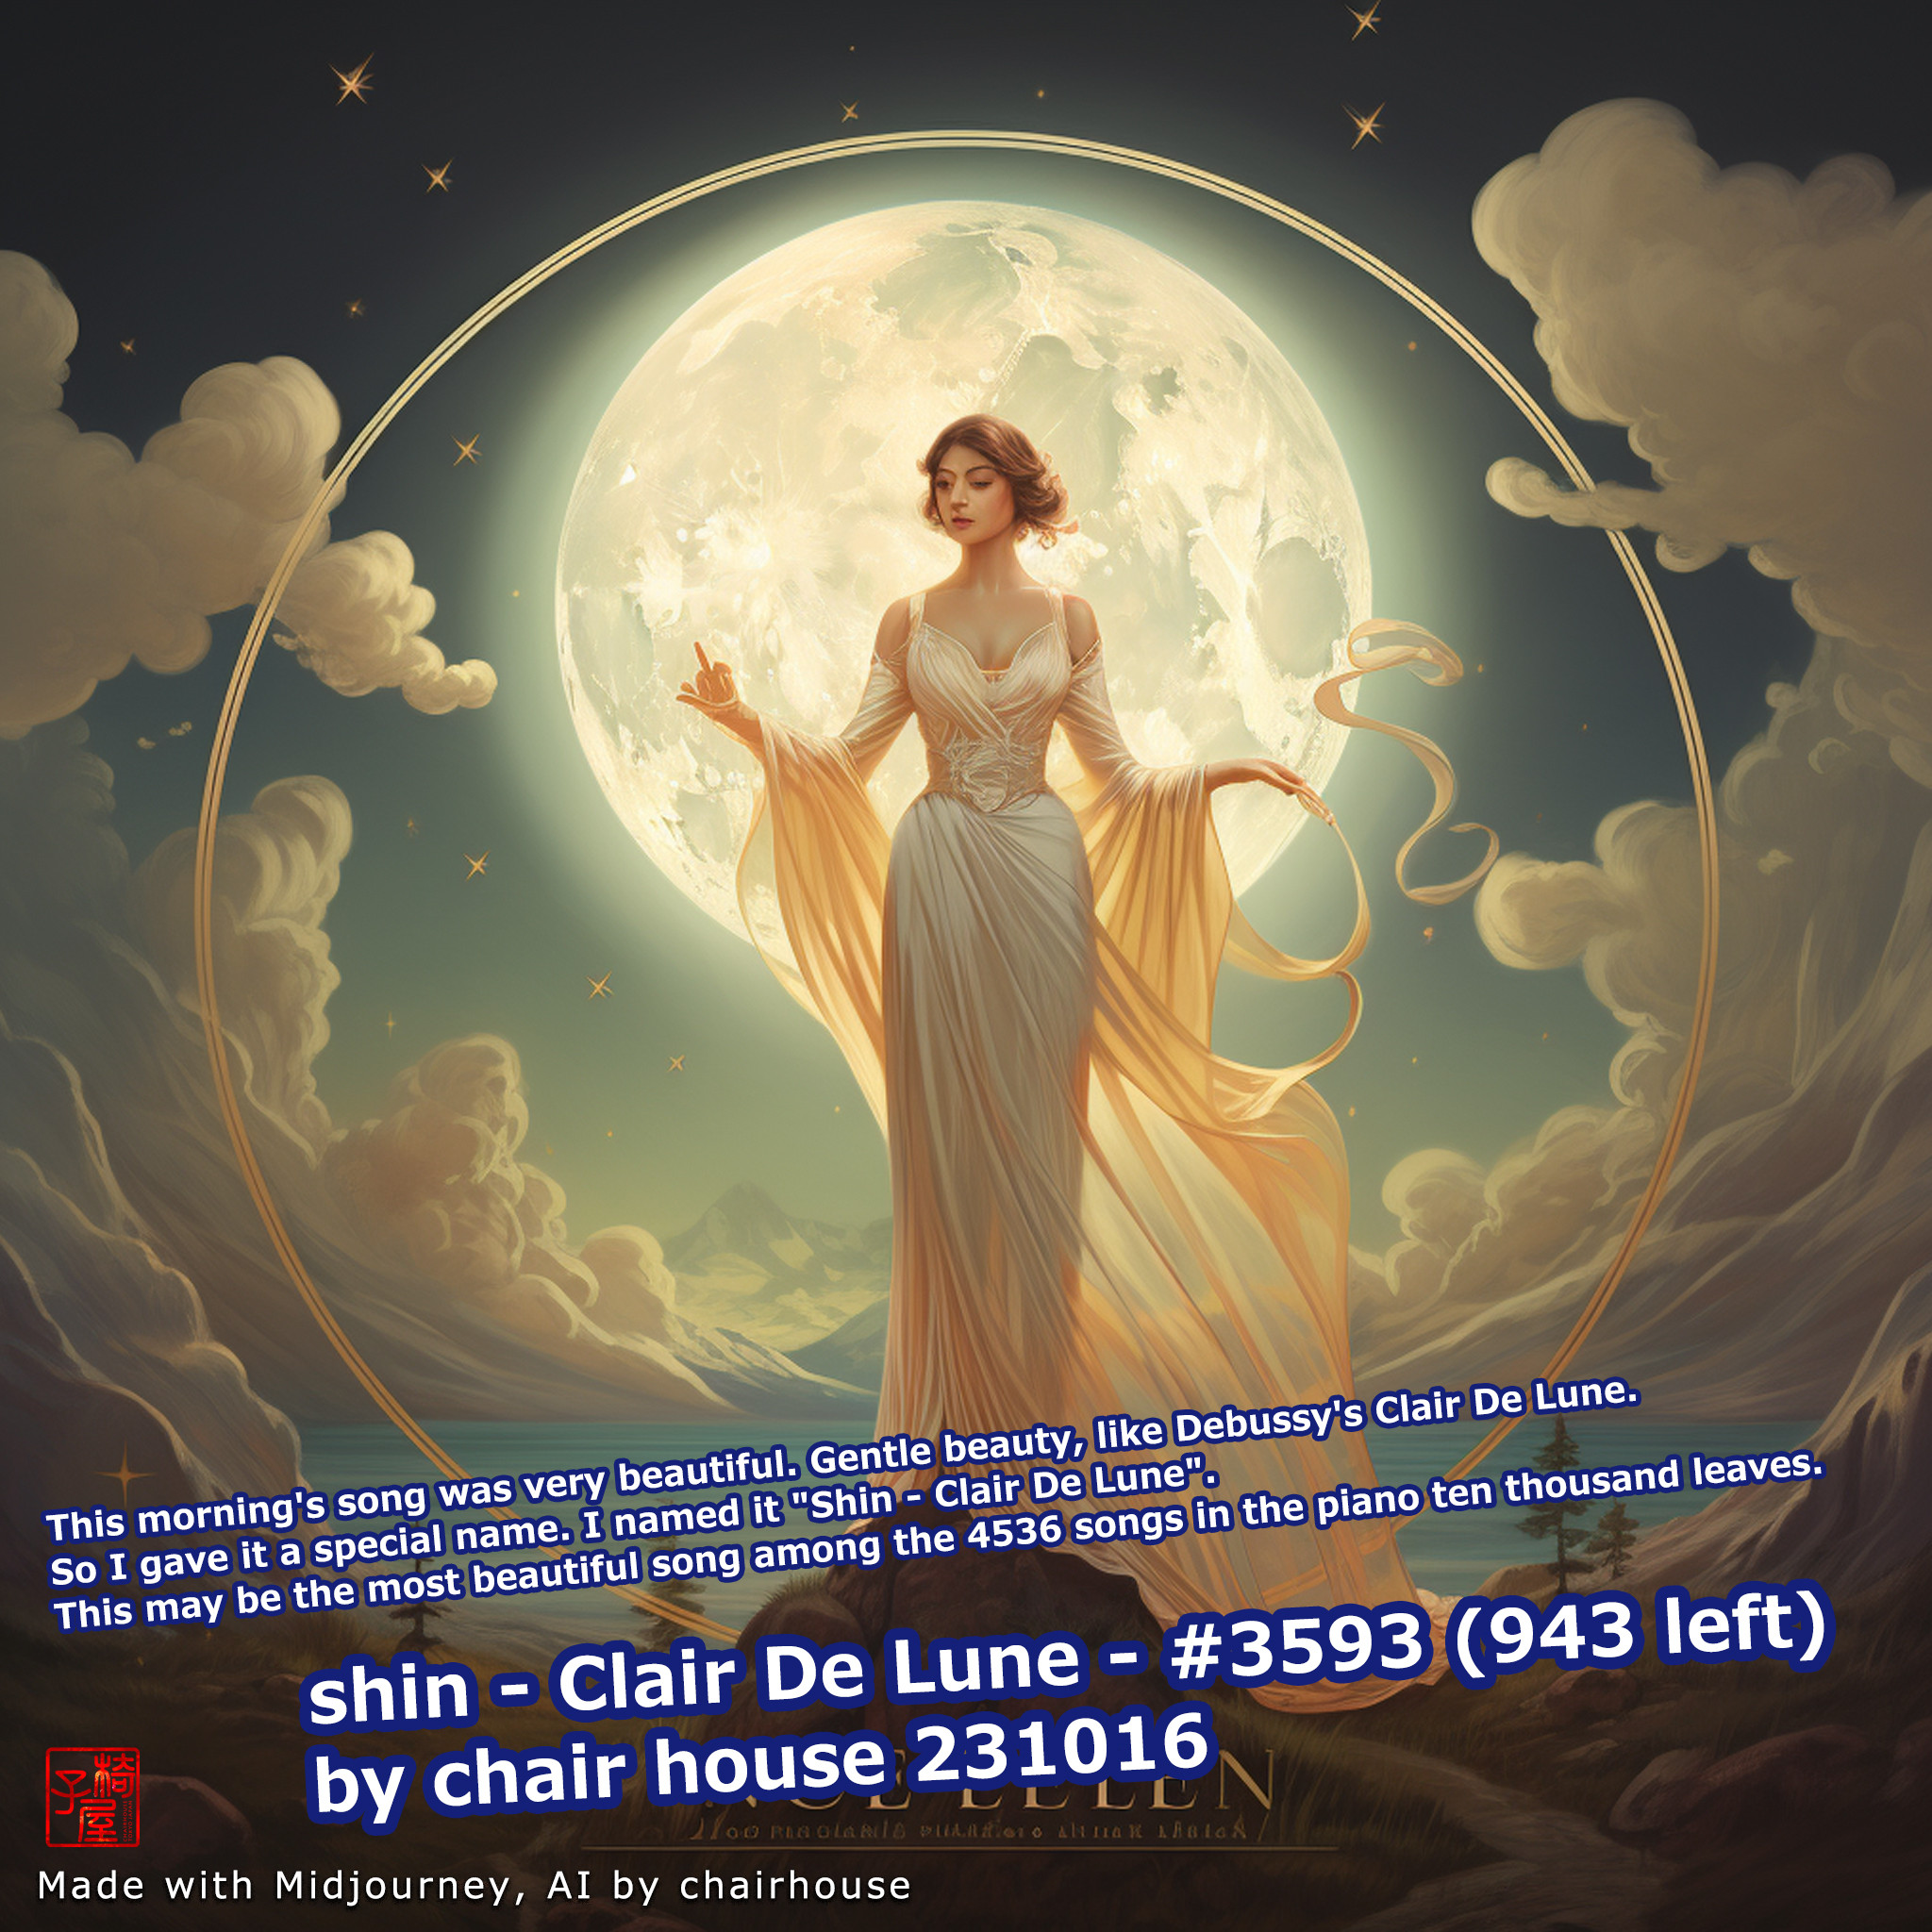 ArtStation - shin - Clair De Lune with #Midjourney 231016